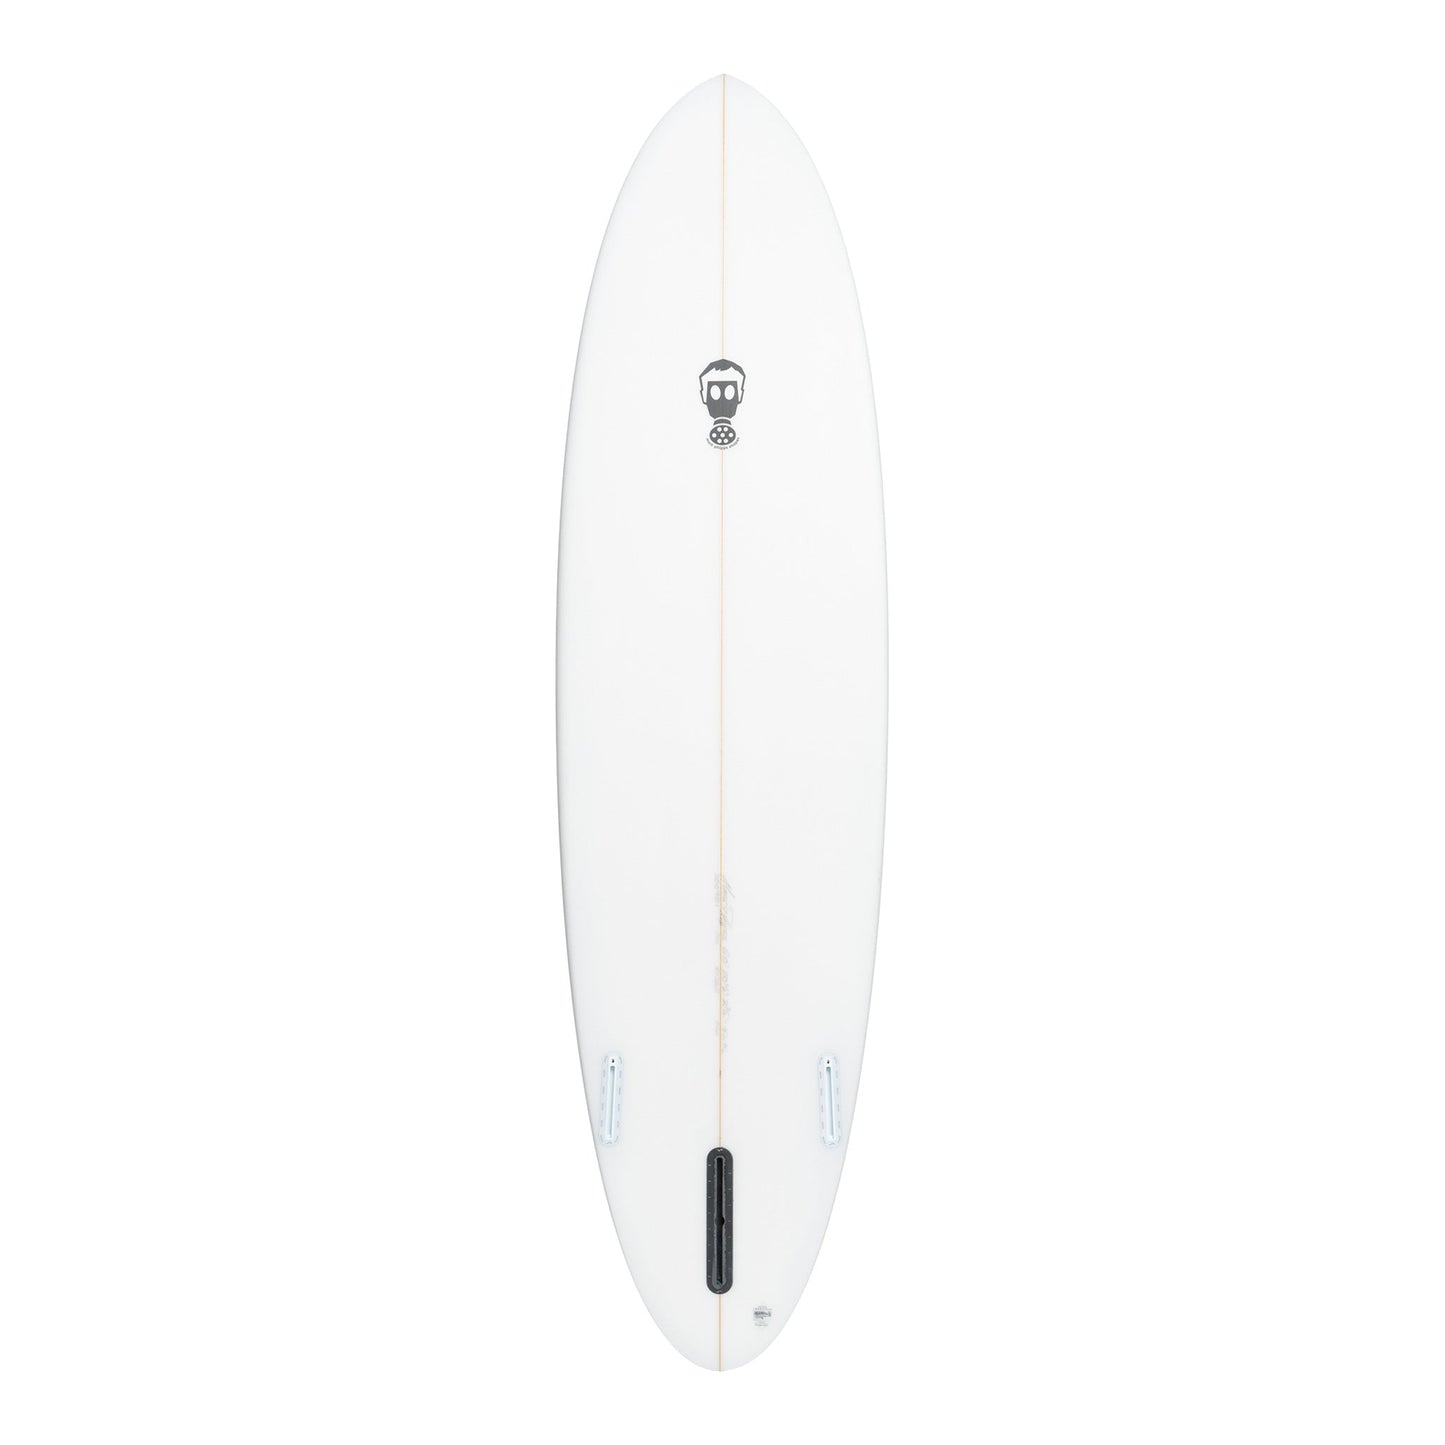 mark-phipps-surfboards-one-bad-egg-galway-ireland-blacksheepsurfco-bottom-